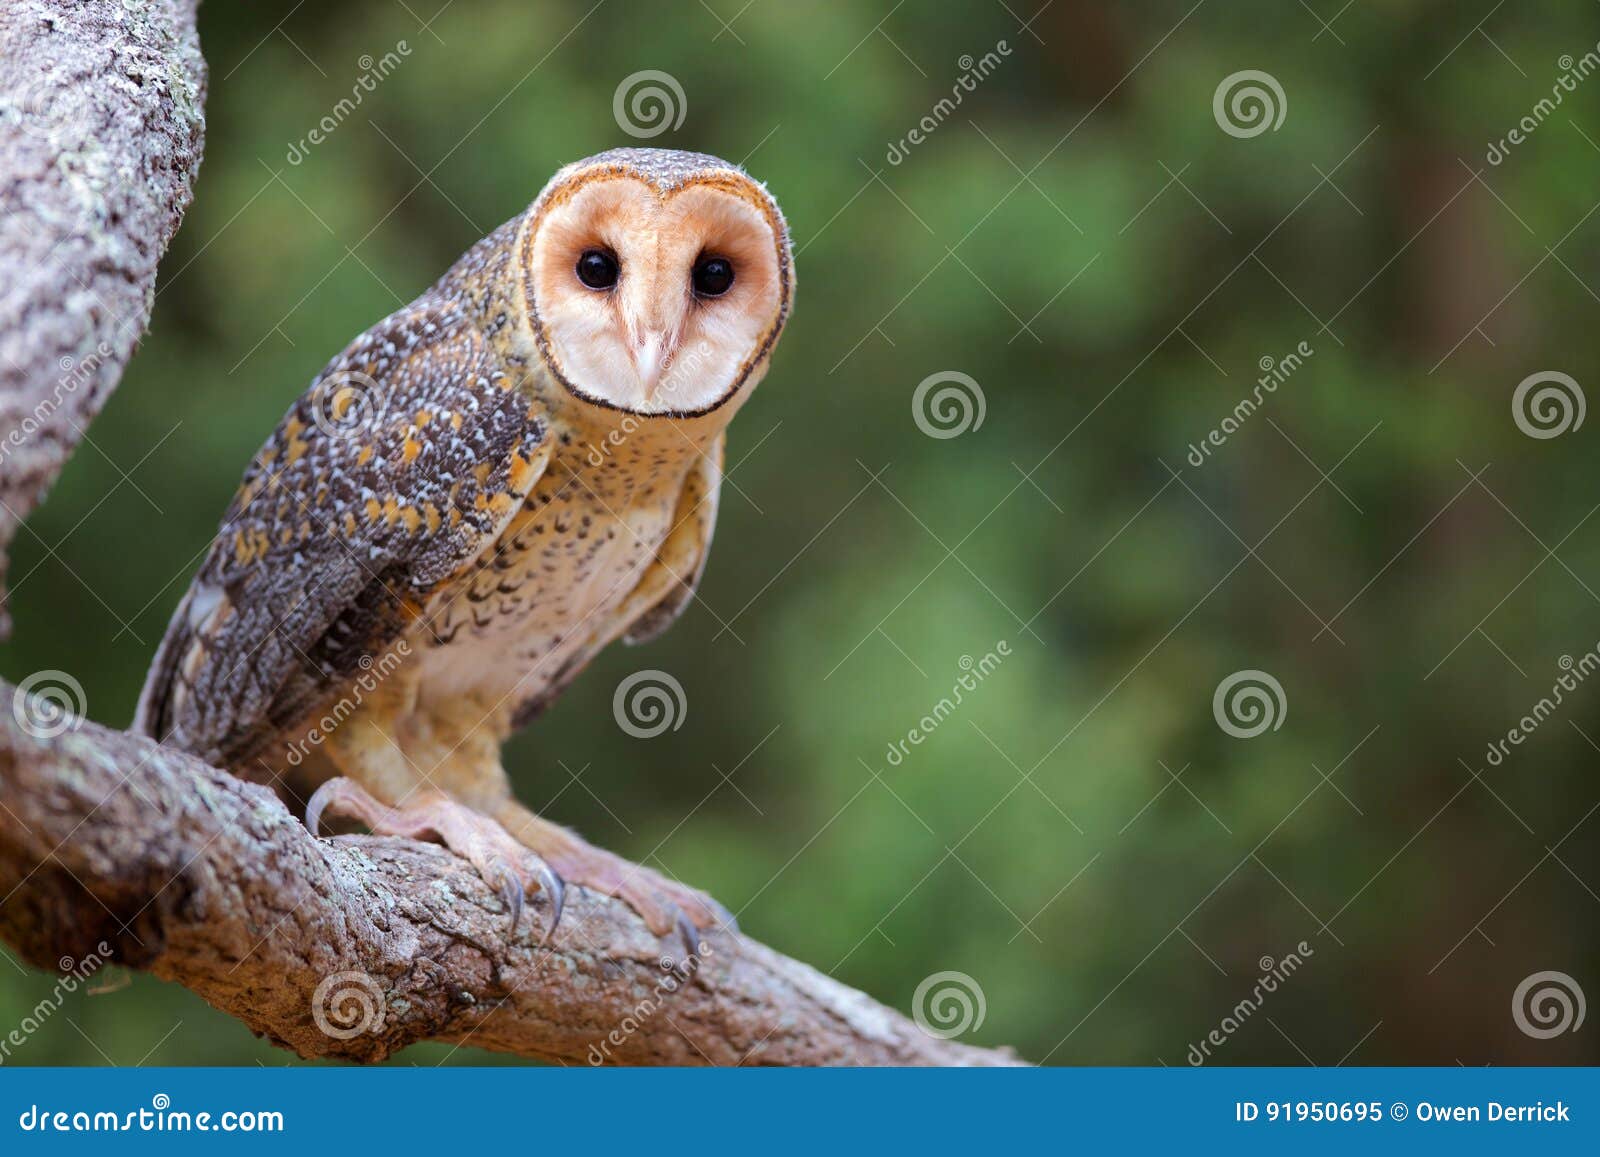 australian masked owl